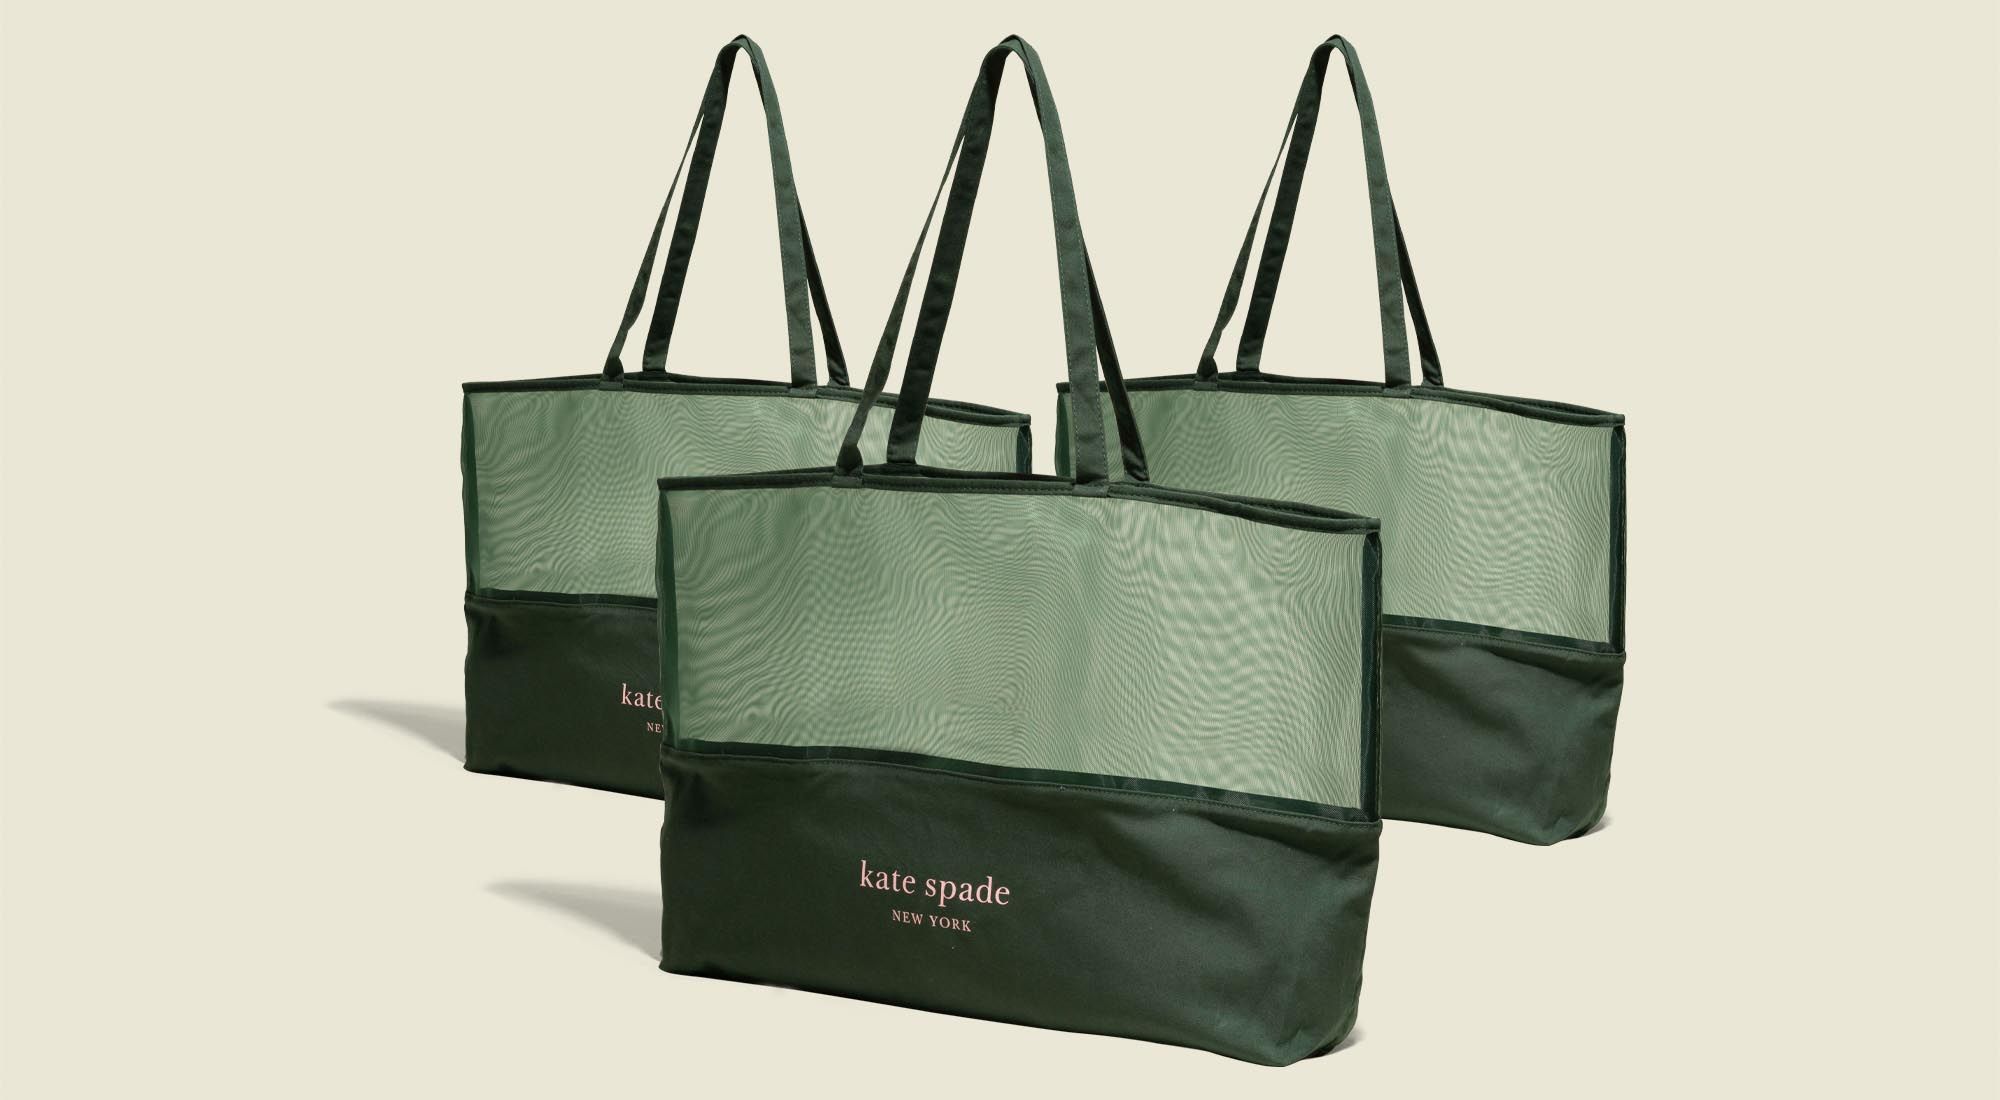 Three tote bags